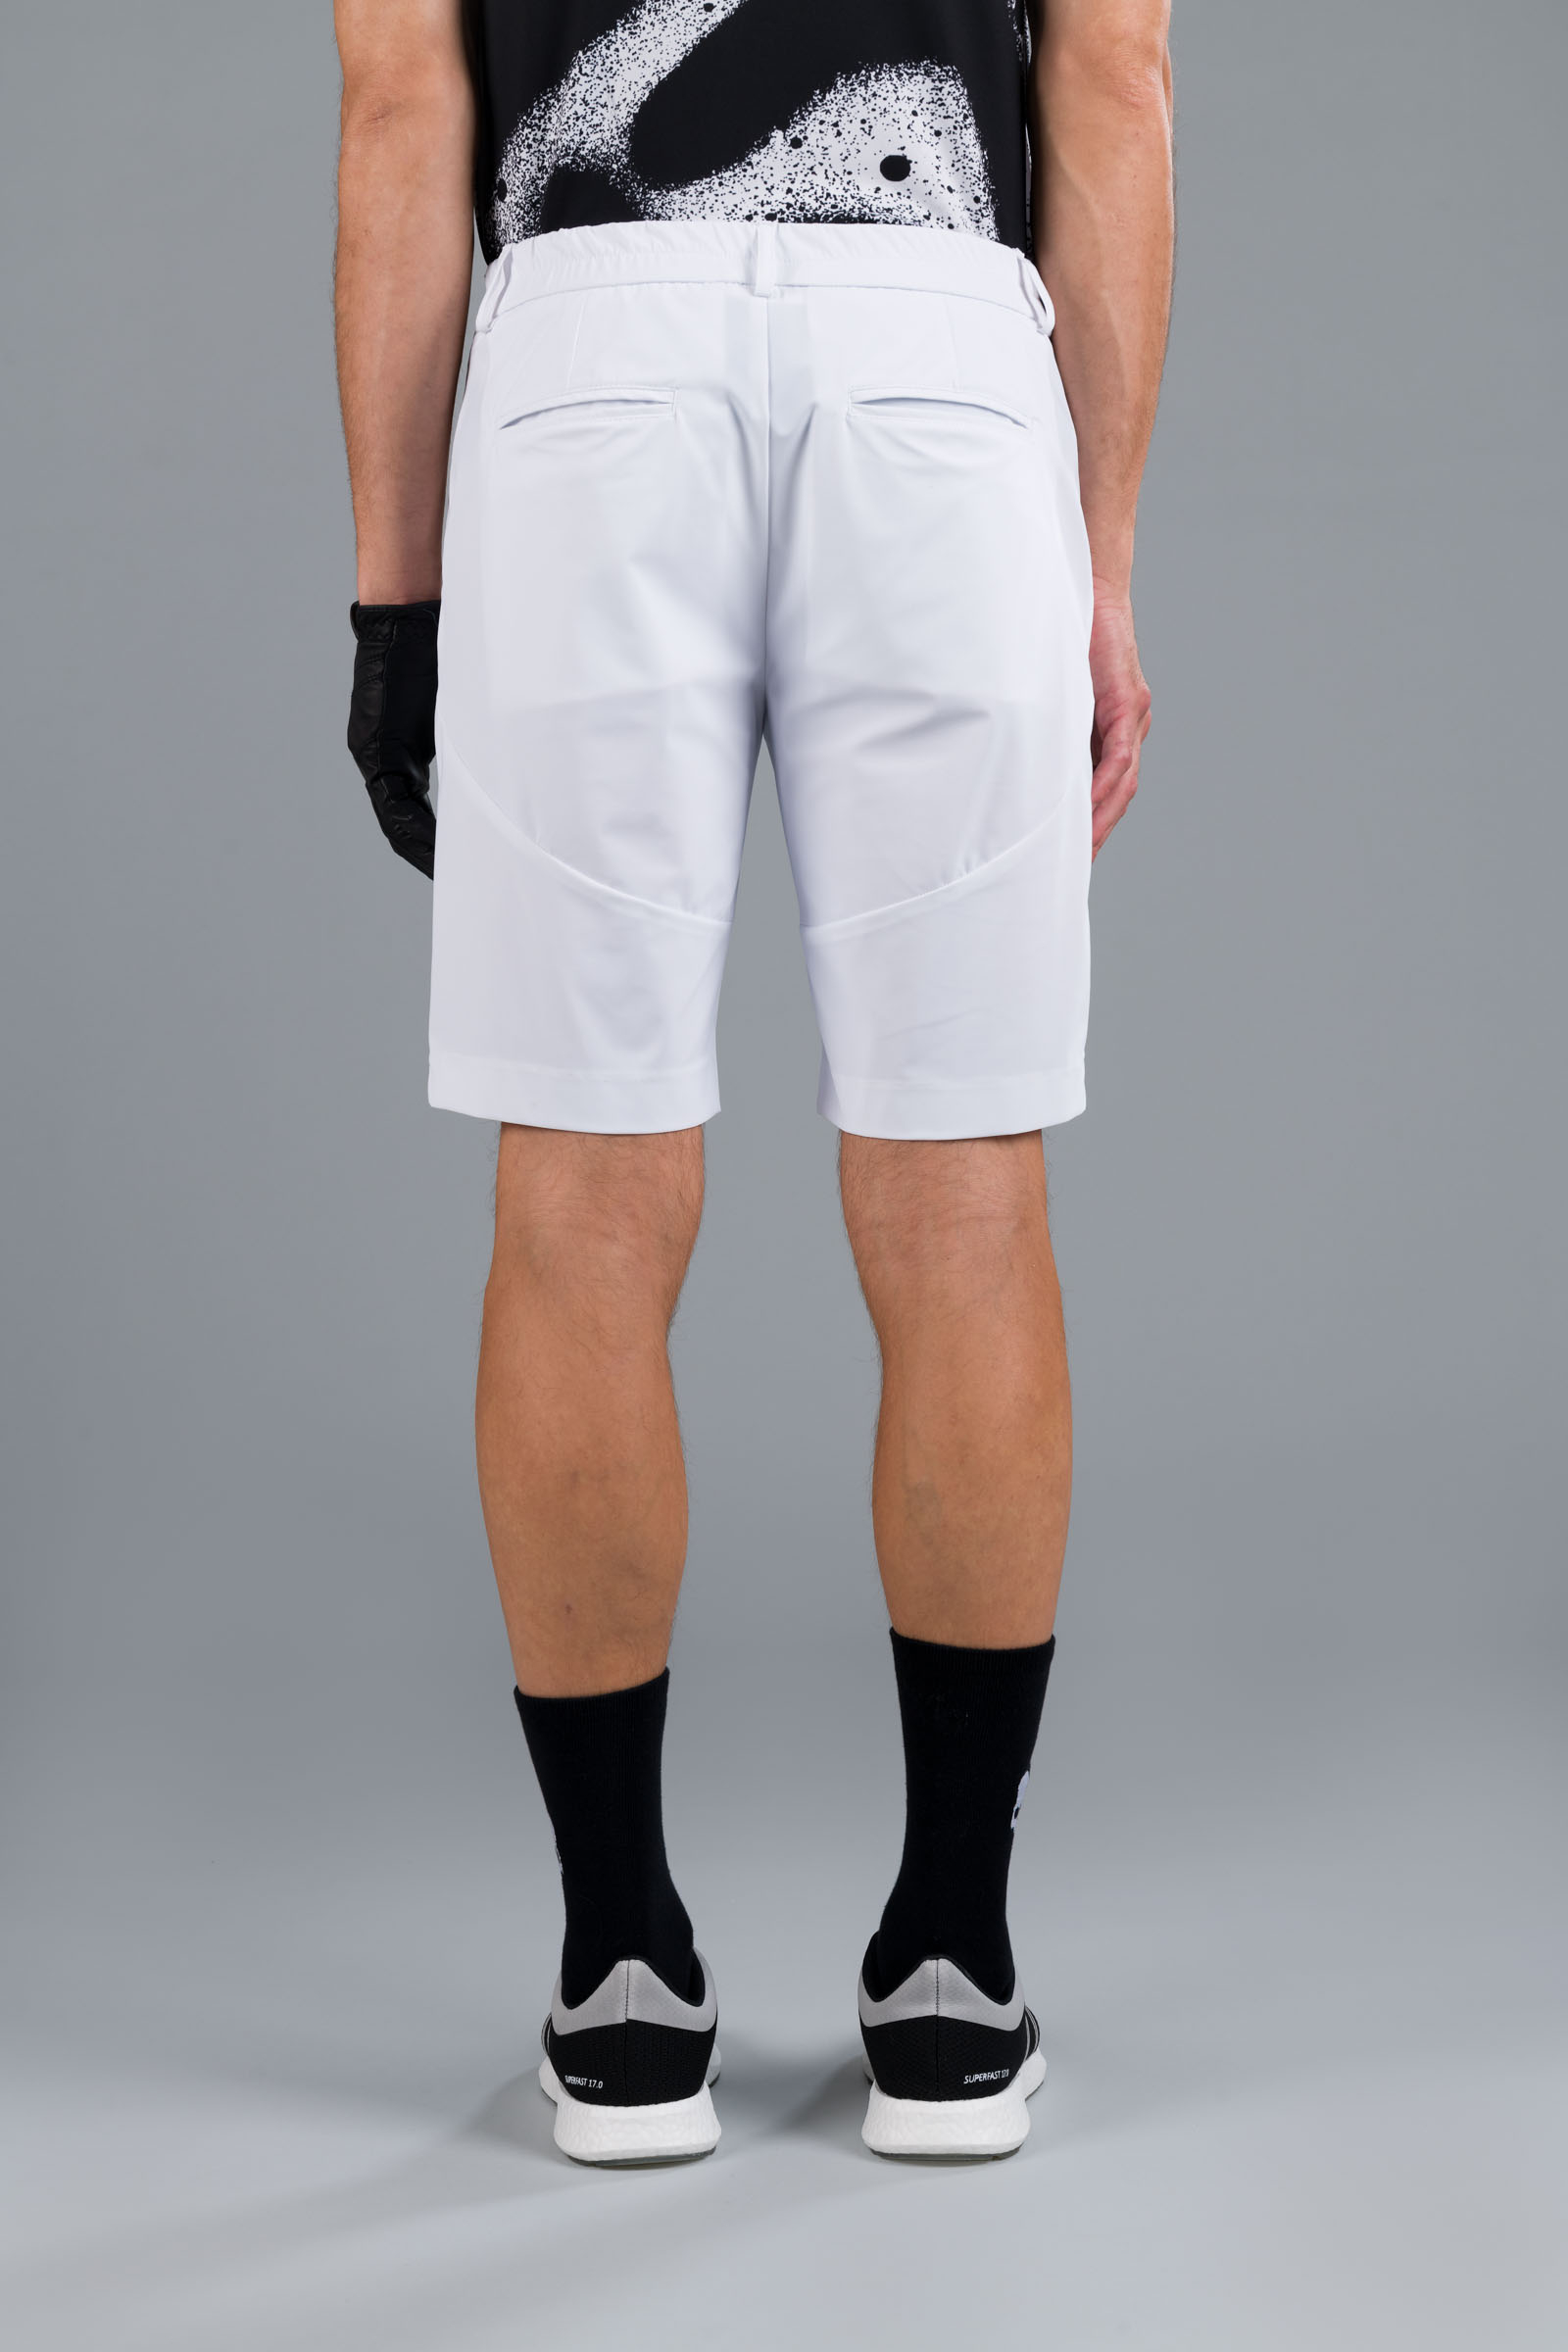 GOLF SHORTS - WHITE - Hydrogen - Luxury Sportwear